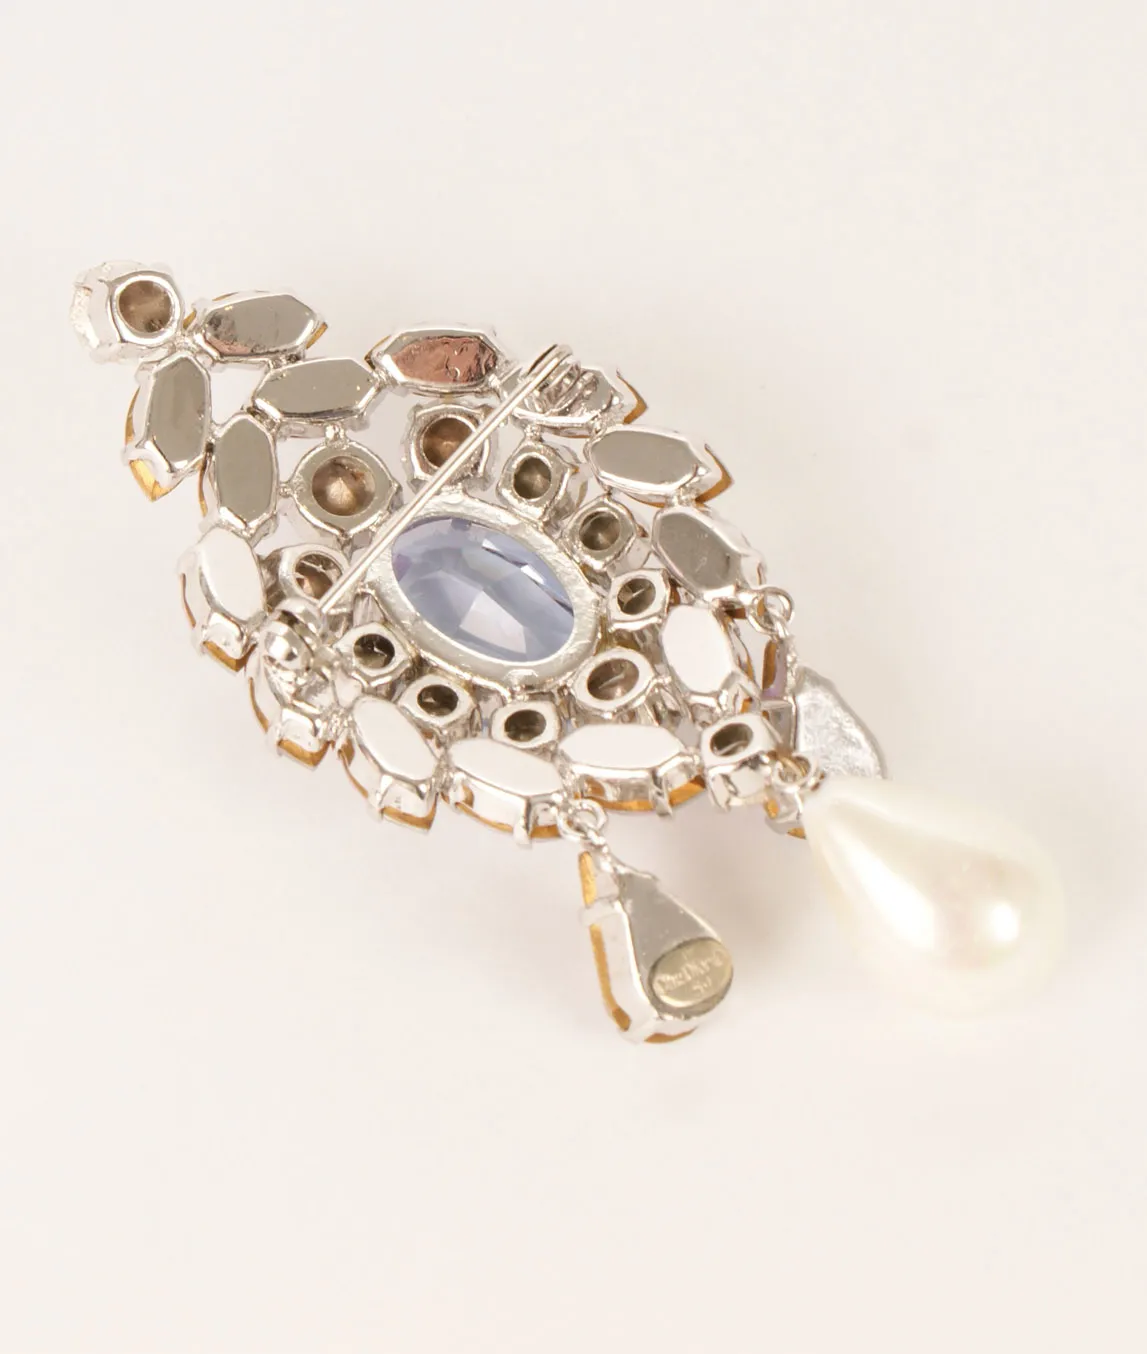 Vintage Dior brooch rhodium plated setting